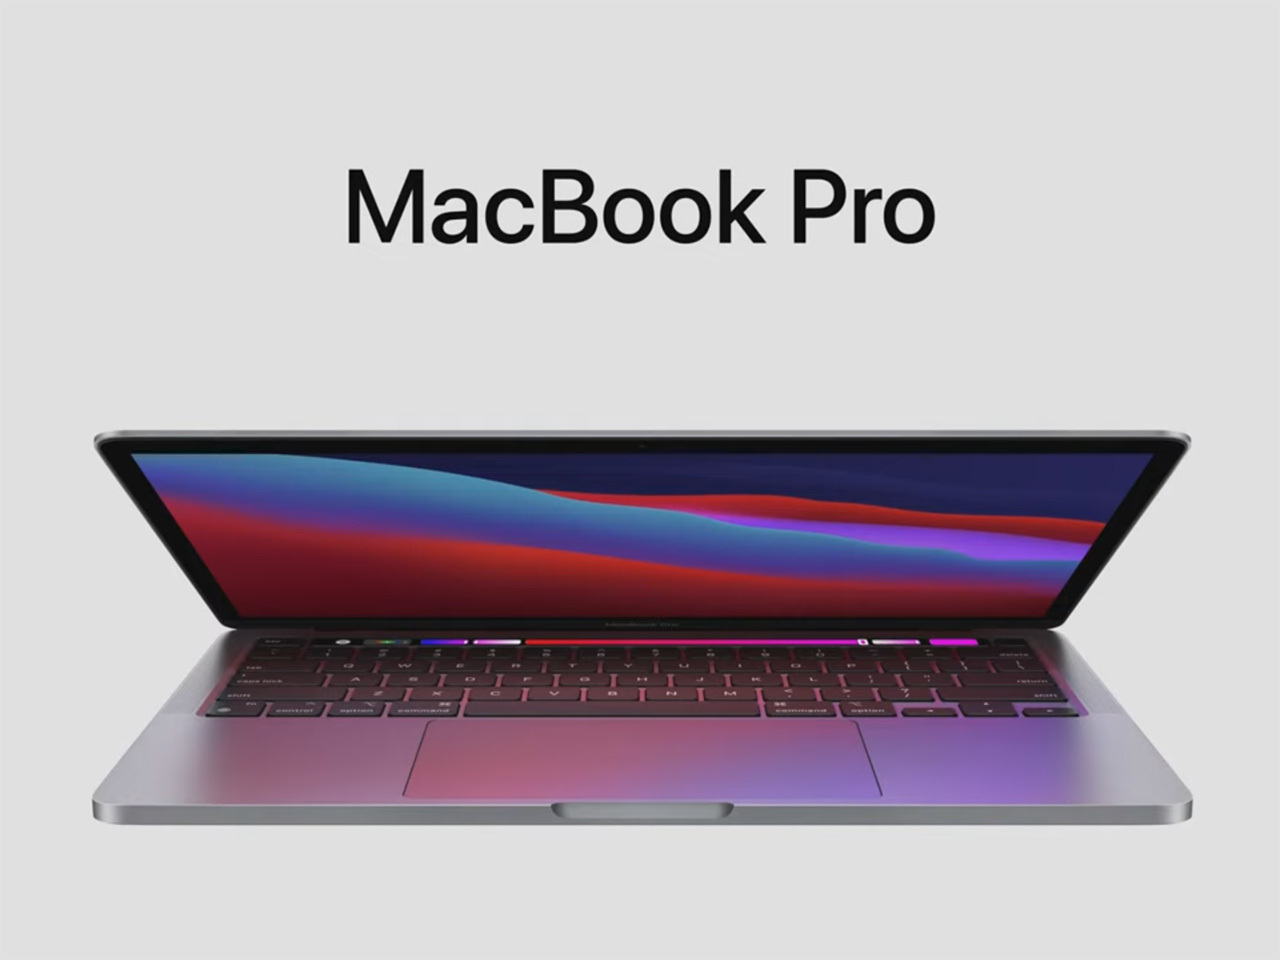 MacBook Pro 13インチも「Apple M1」に刷新--CPUは2.8倍高速化、13万4800円から - CNET Japan